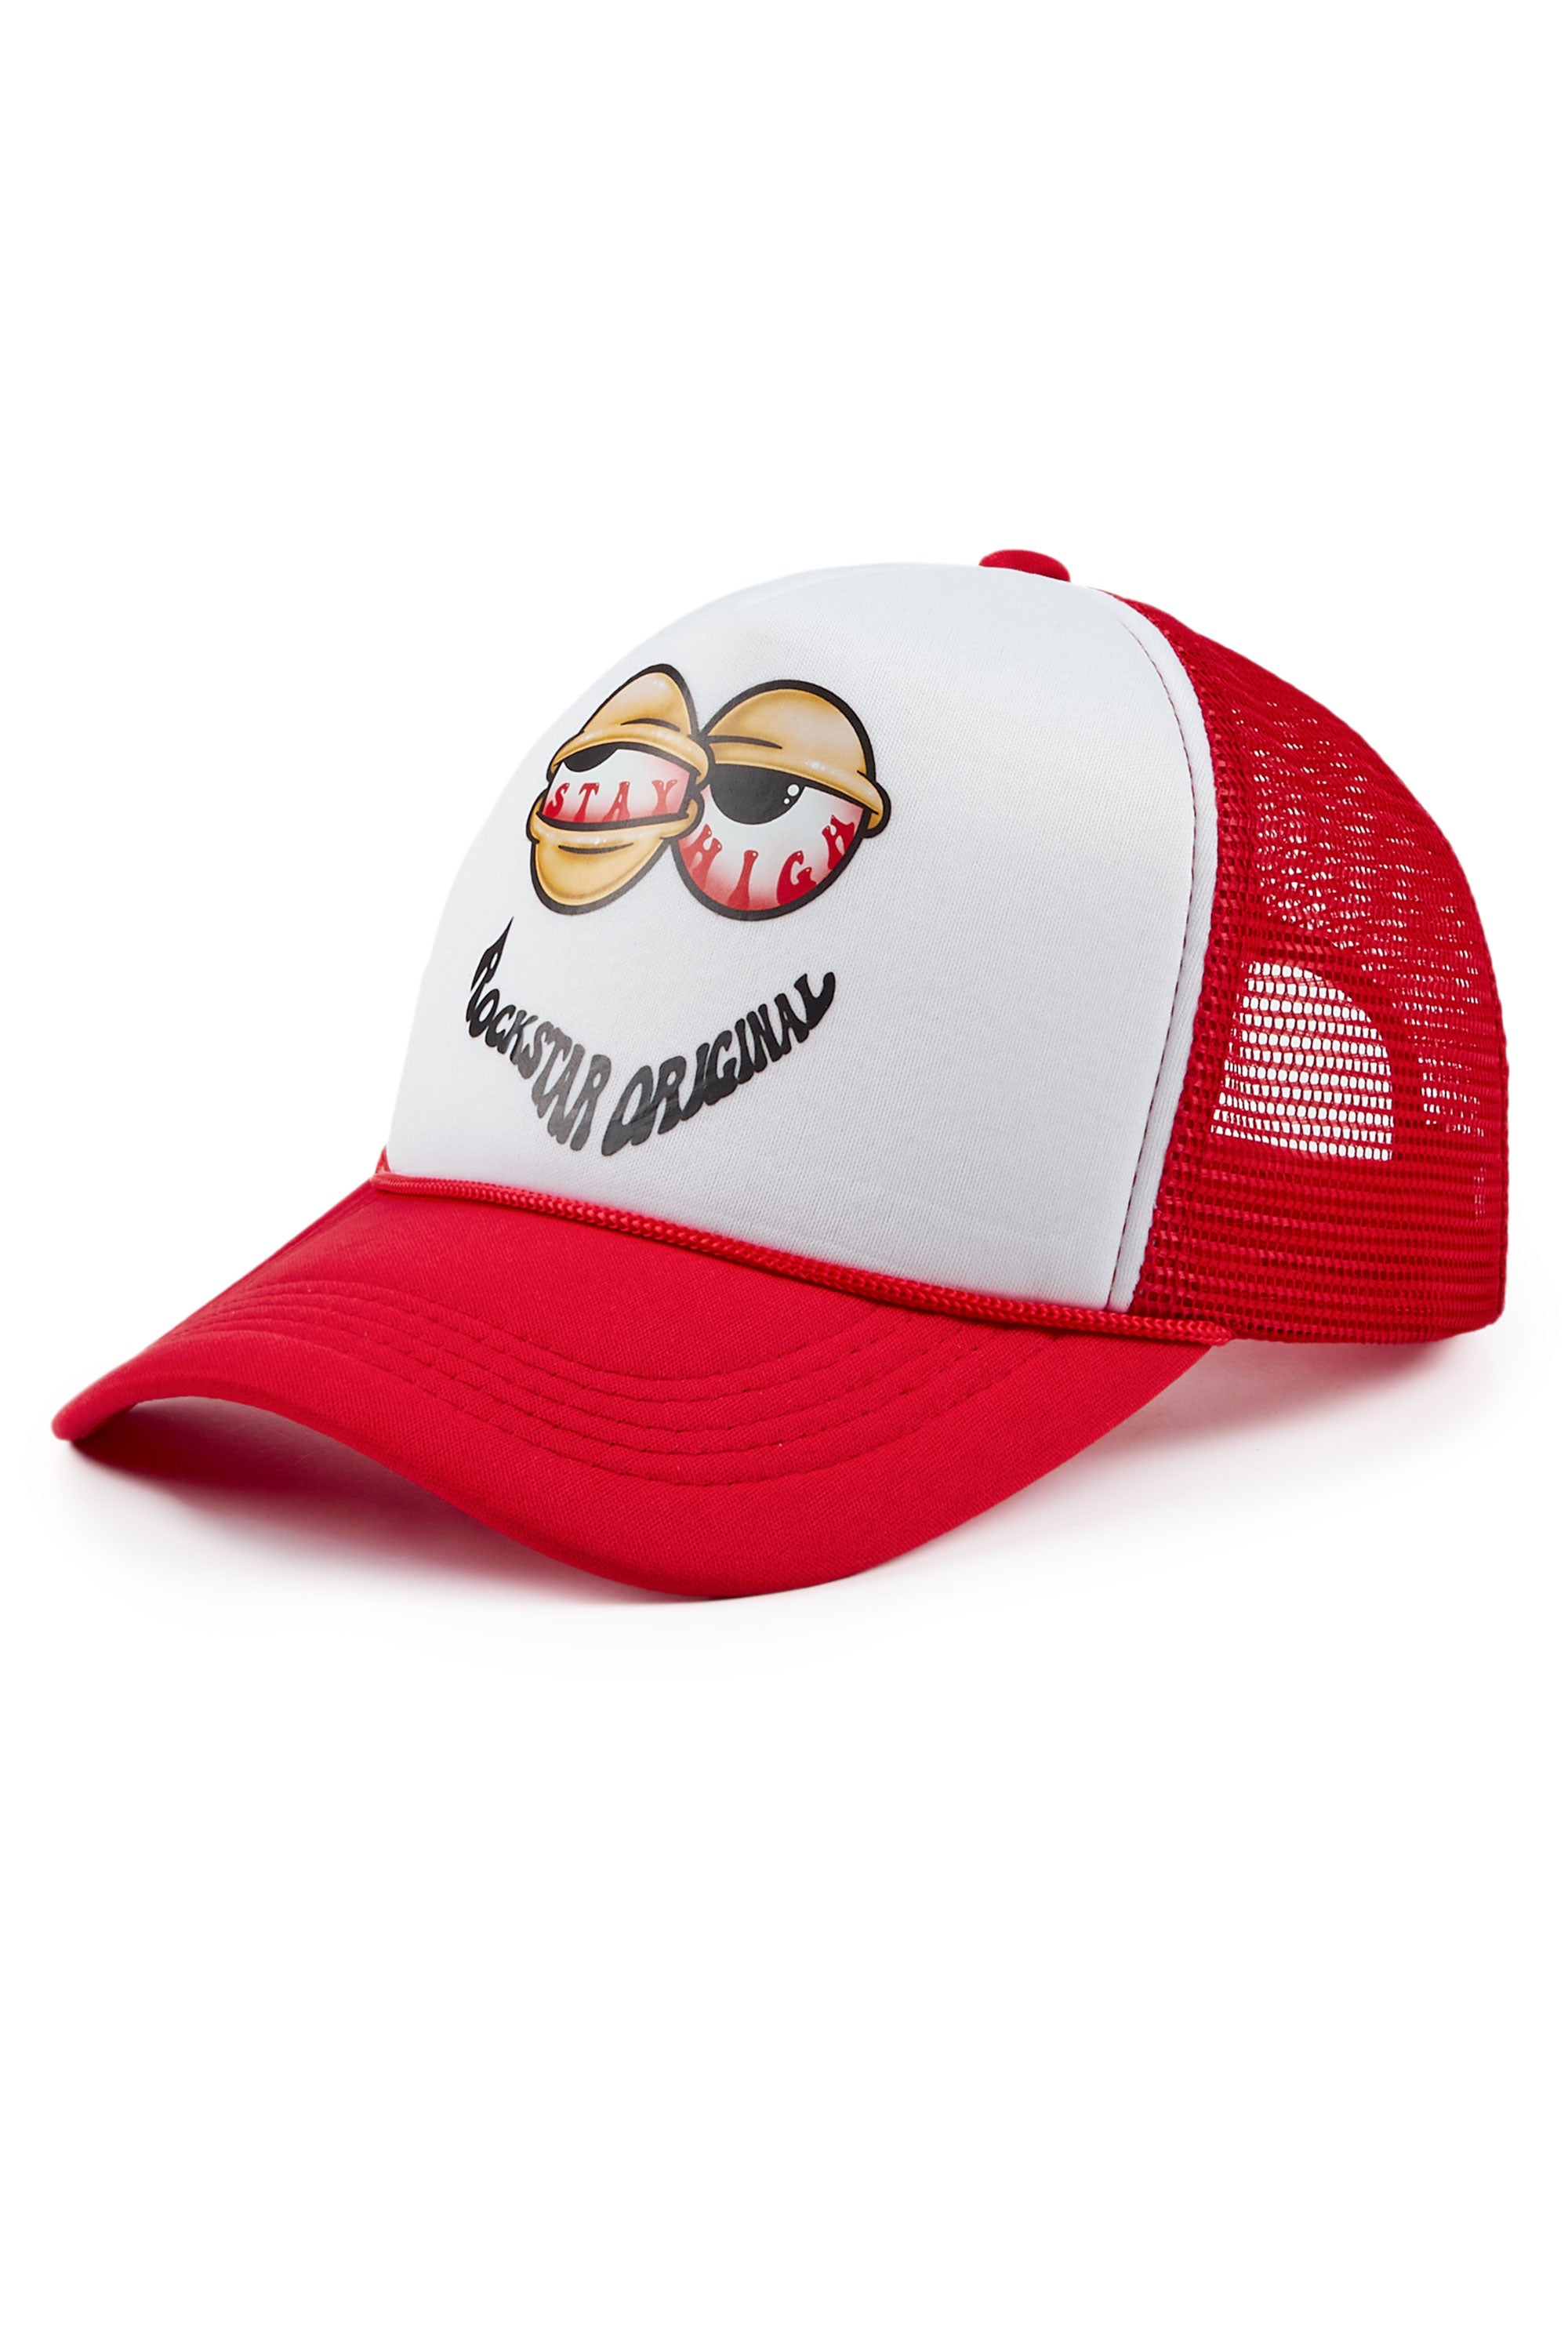 Highya White/Red Trucker Hat